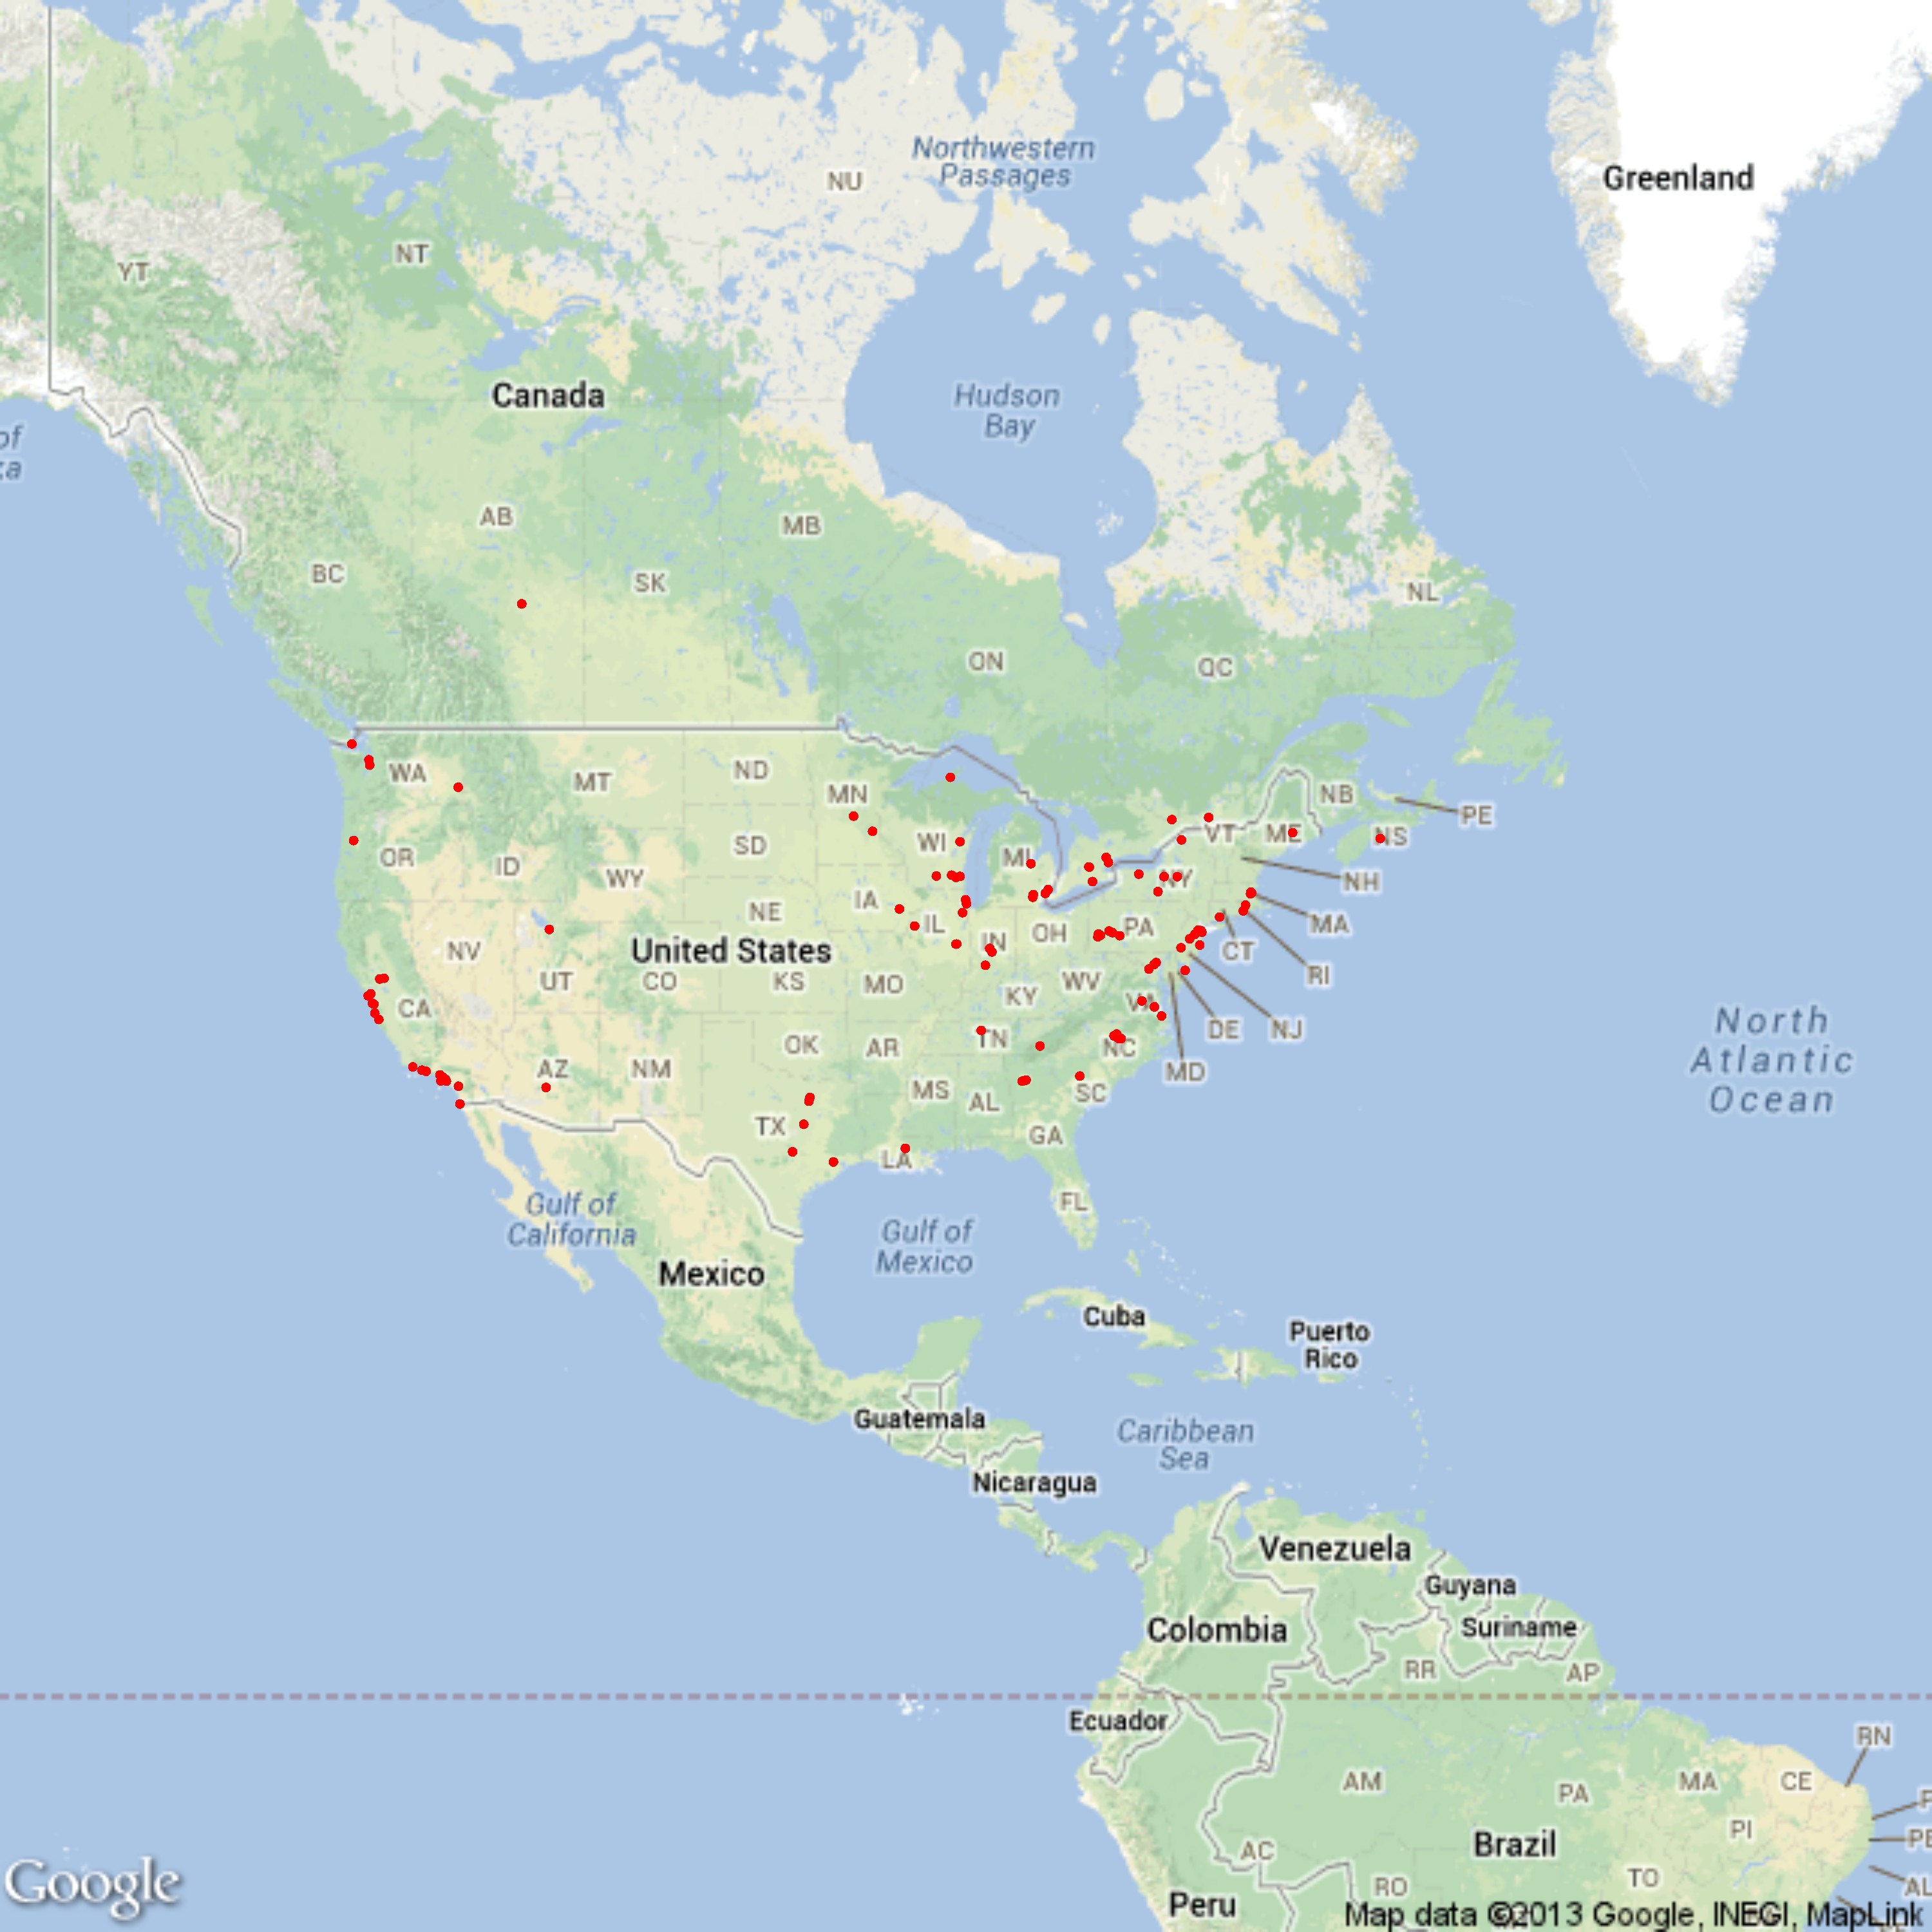 Google Map Us And Canada Maps Usa States Florida 45 With East Asia 9 - Google Maps Florida